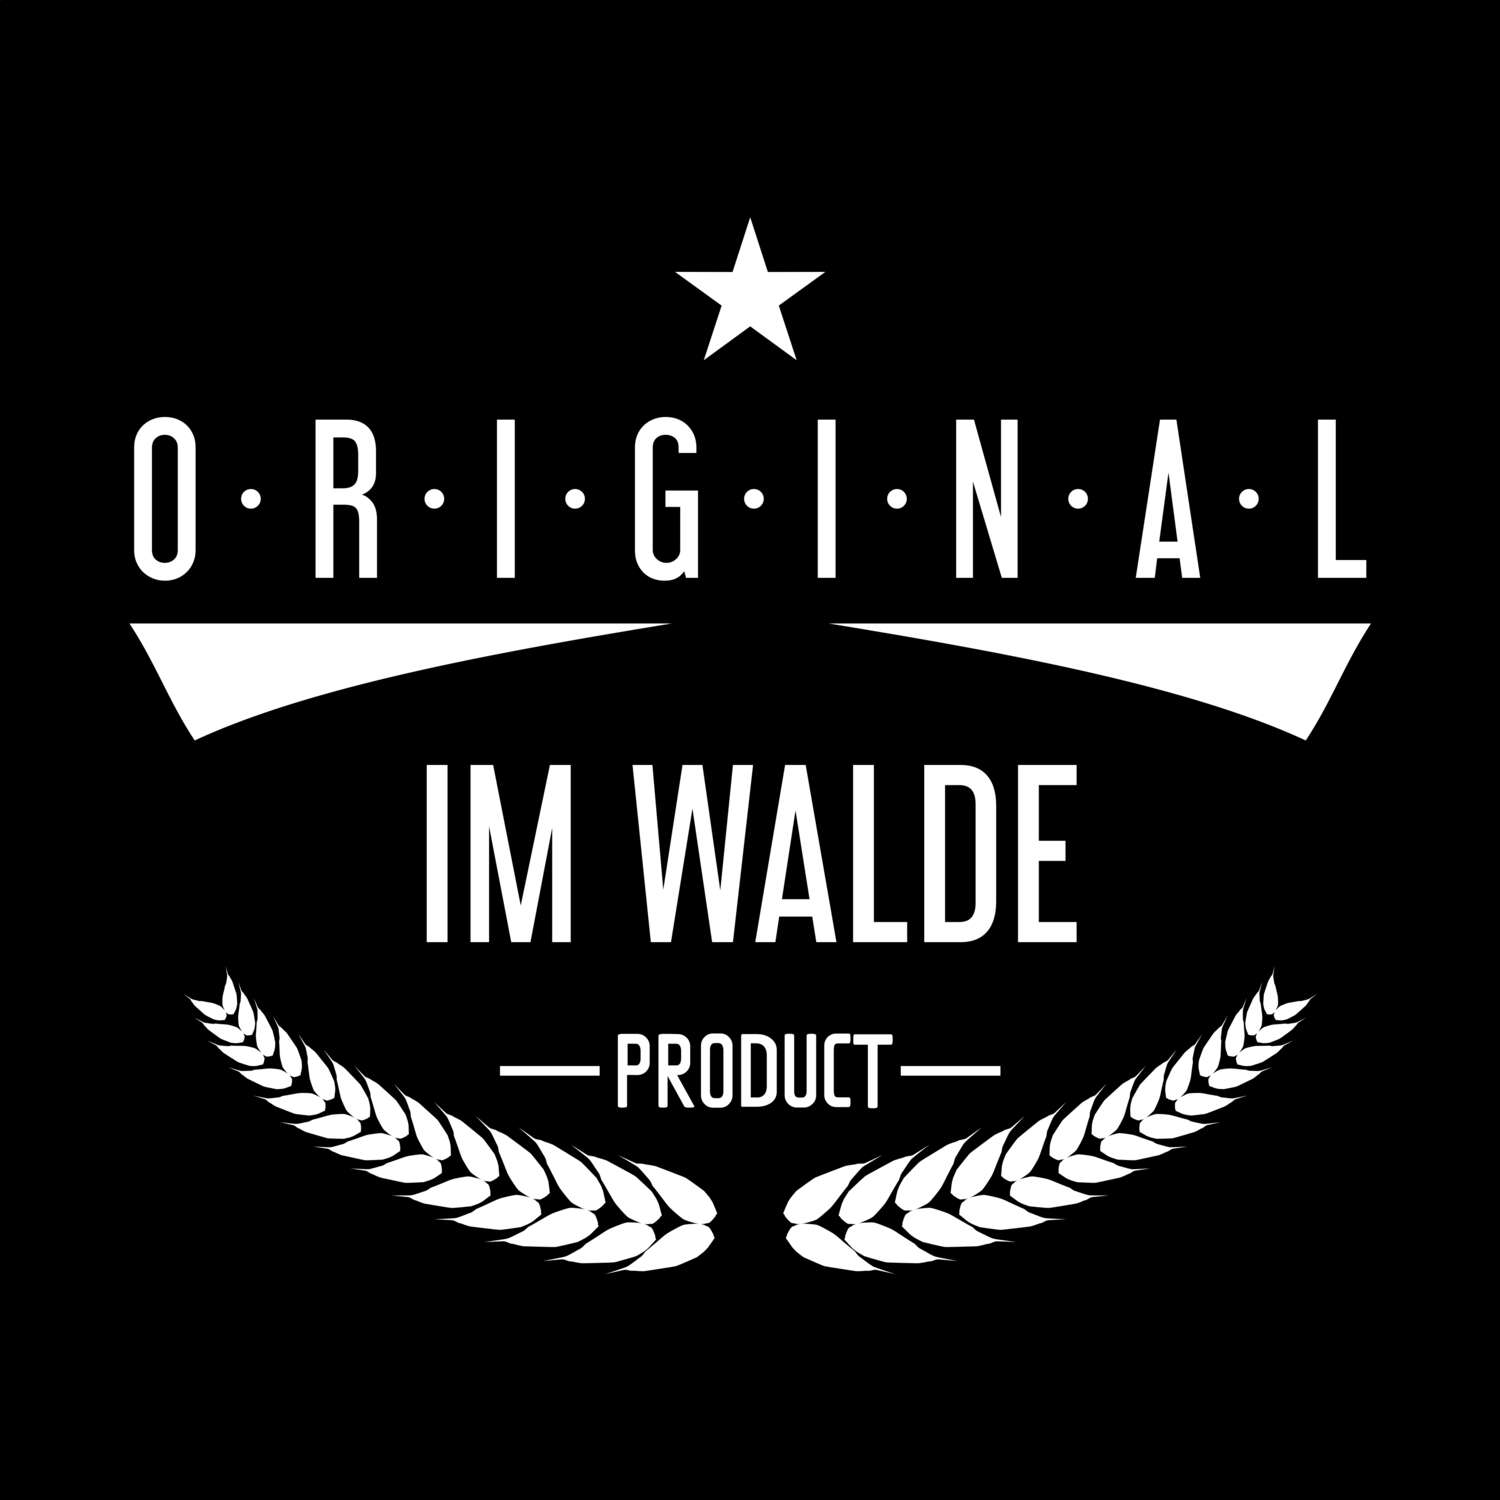 Im Walde T-Shirt »Original Product«